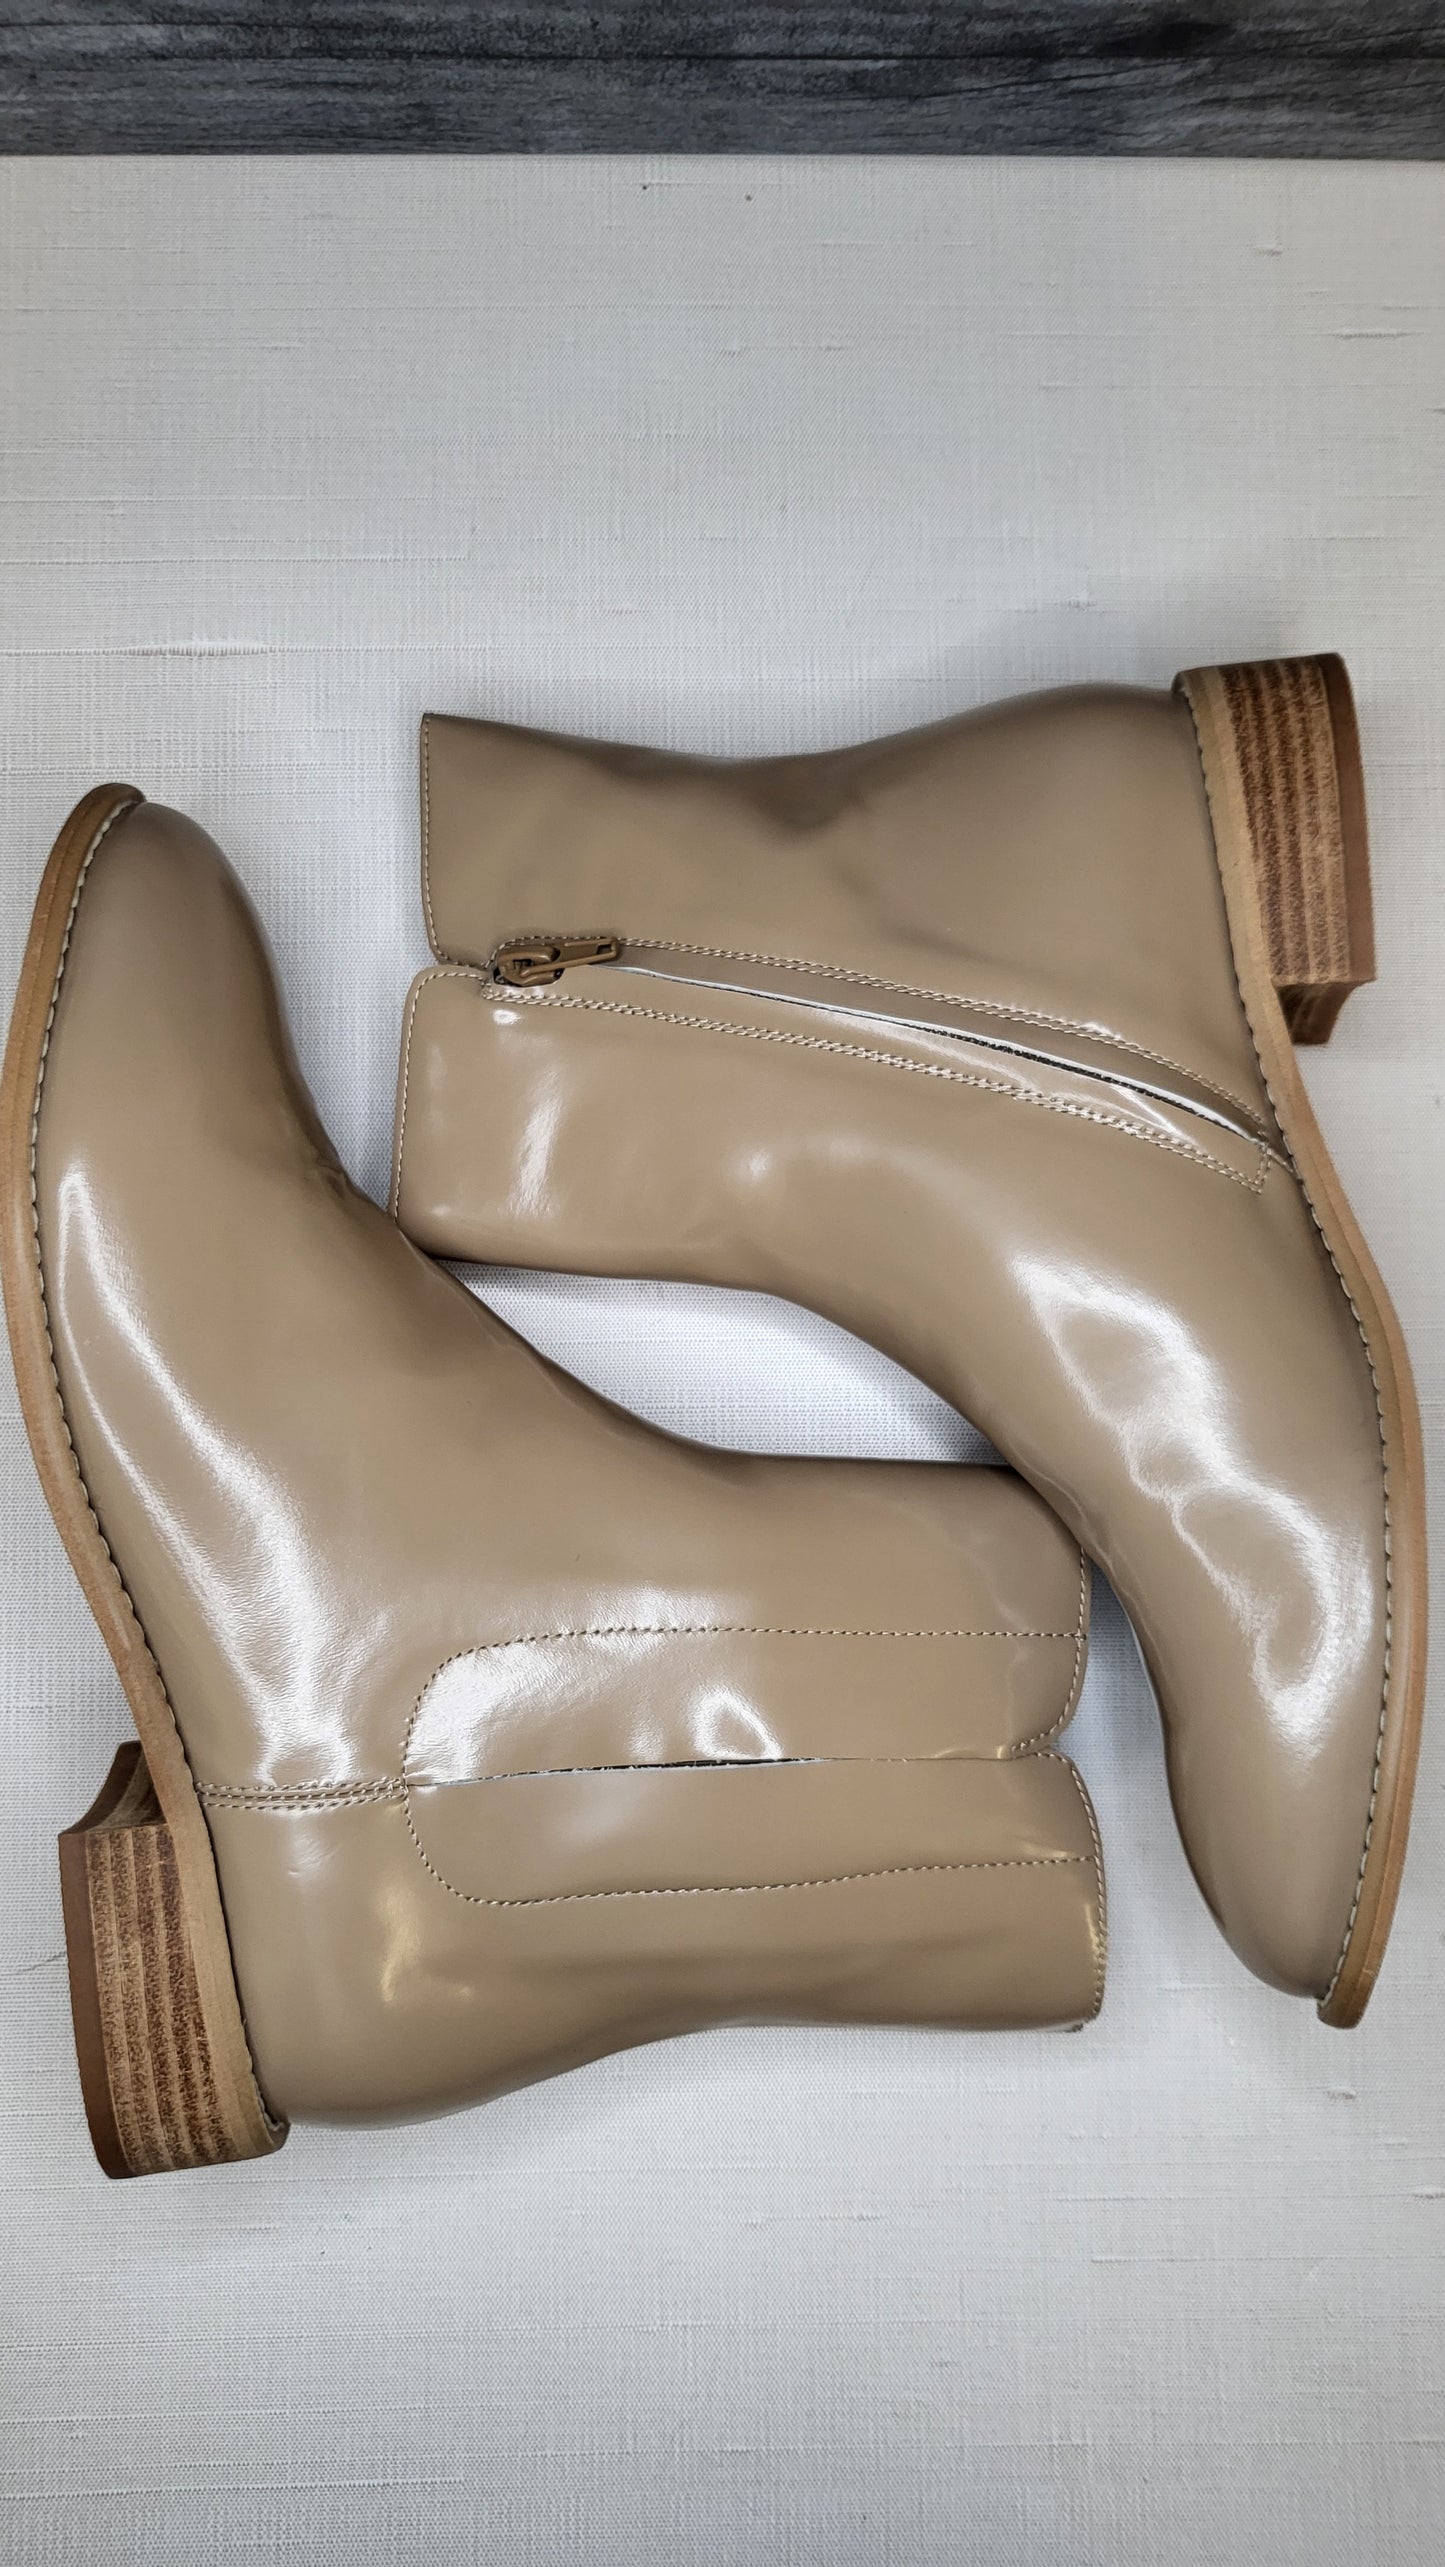 Walnut beige Denmark Leather Boot BNWT (41)